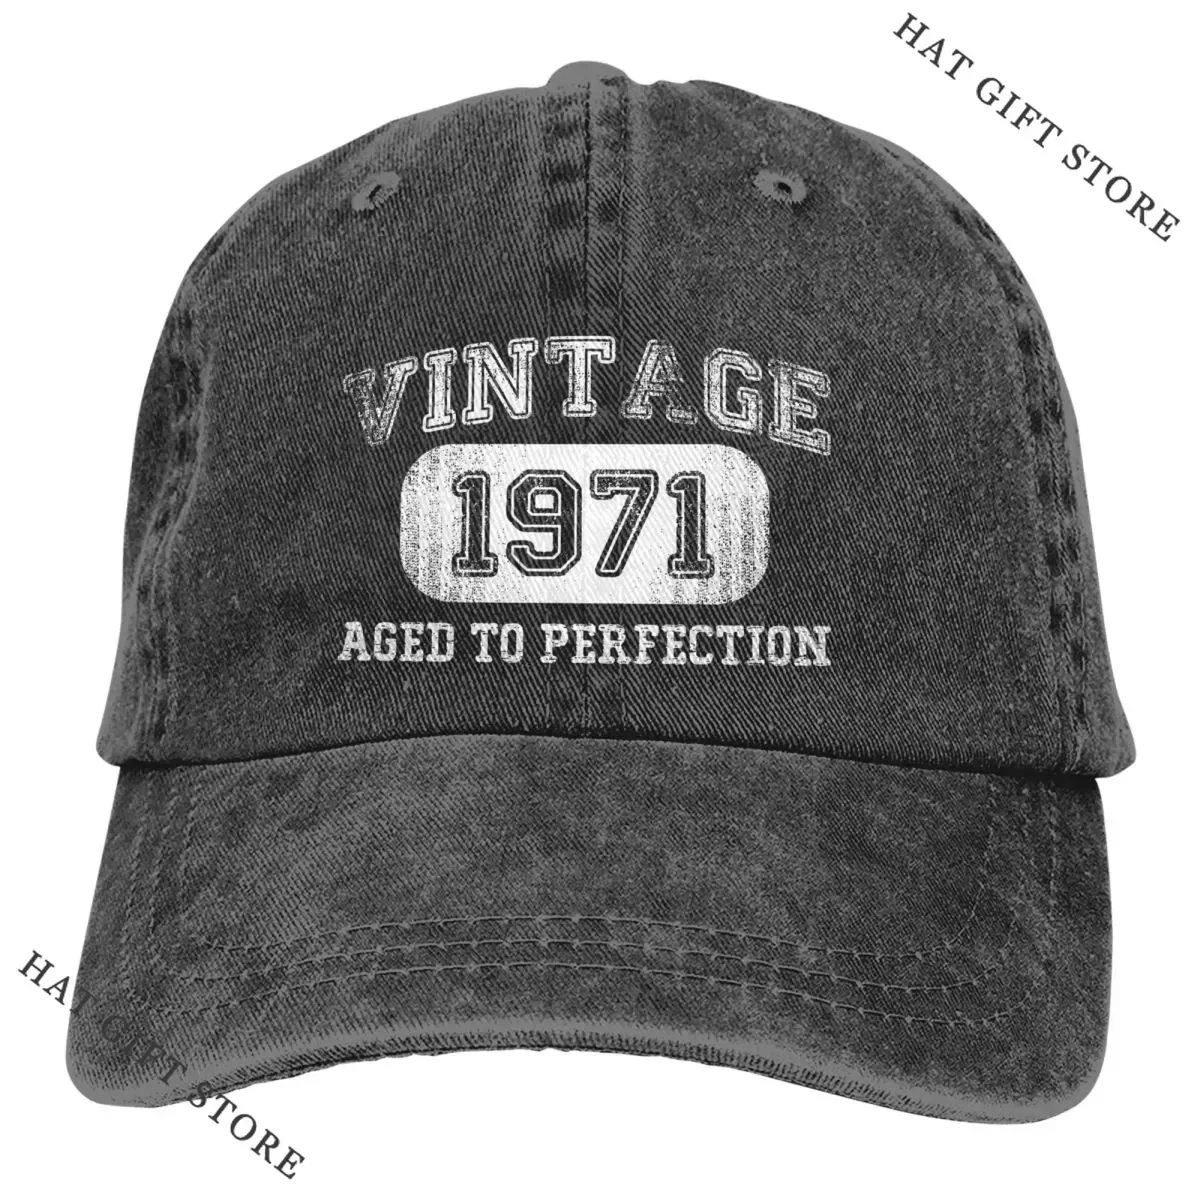 

Hot Pure Color Dad Hats White Women's Hat Sun Visor Baseball Caps Vintage 1971 Culture Peaked Cap